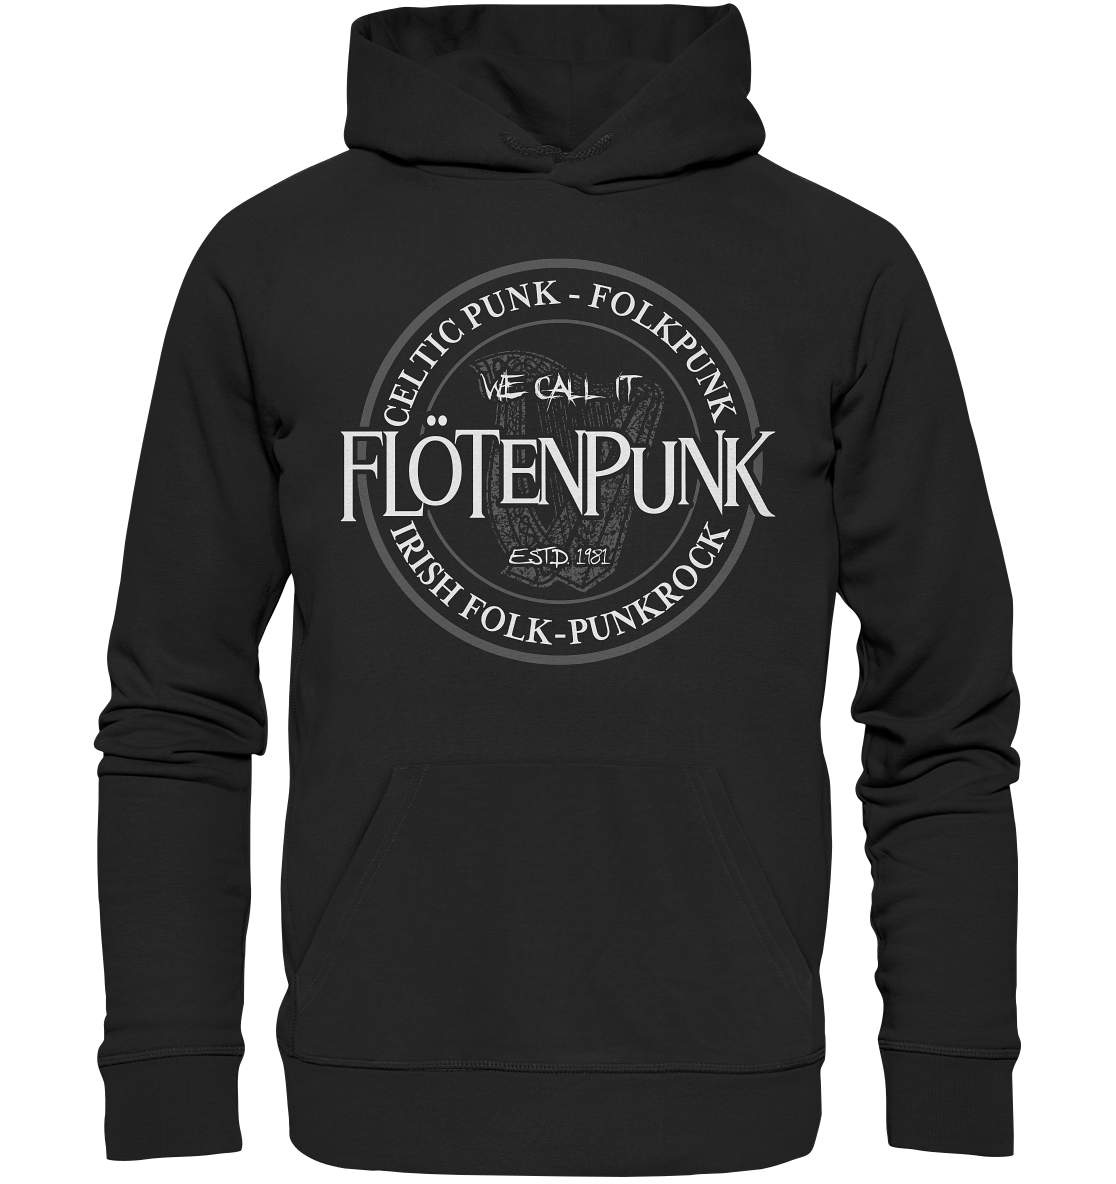 We call it "Flötenpunk" - Organic Hoodie